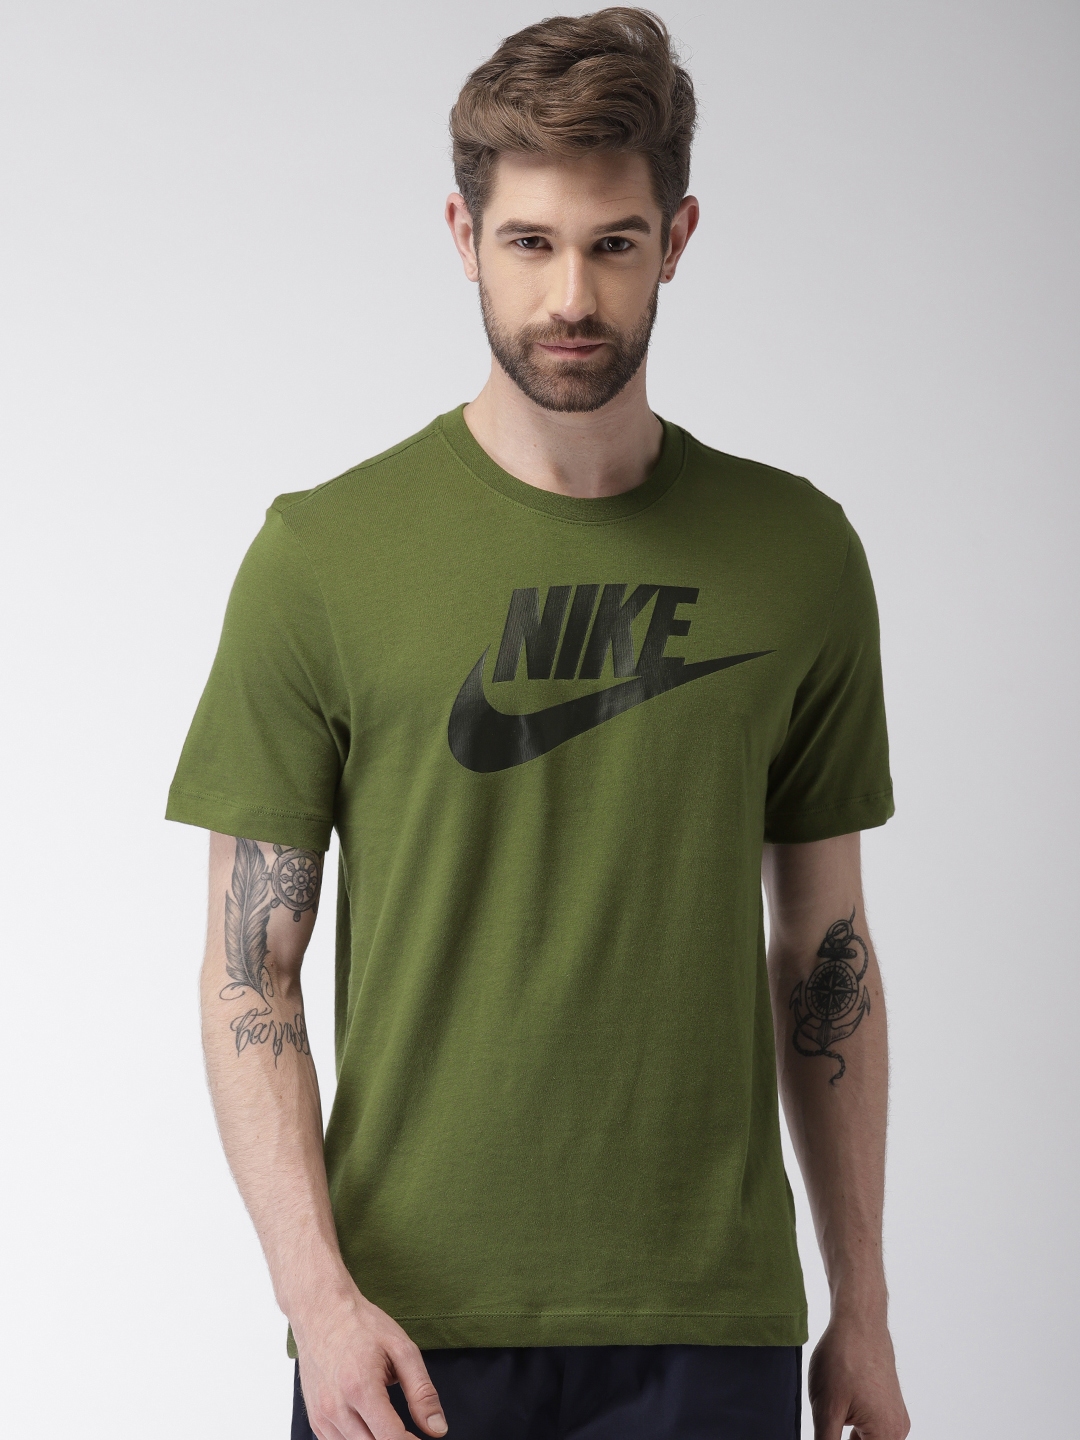 olive green nike shirt mens